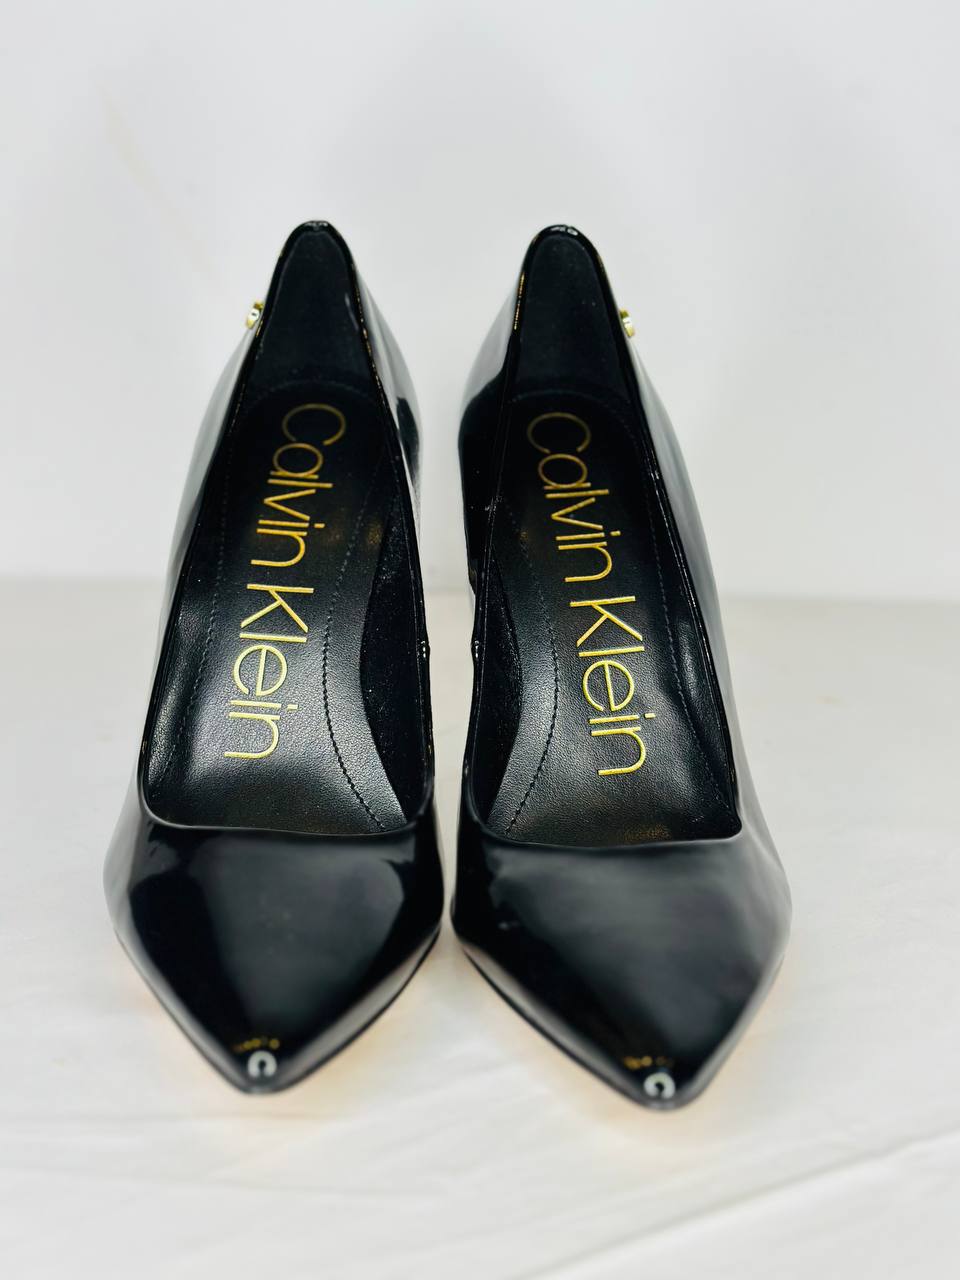 Calvin Klein heels